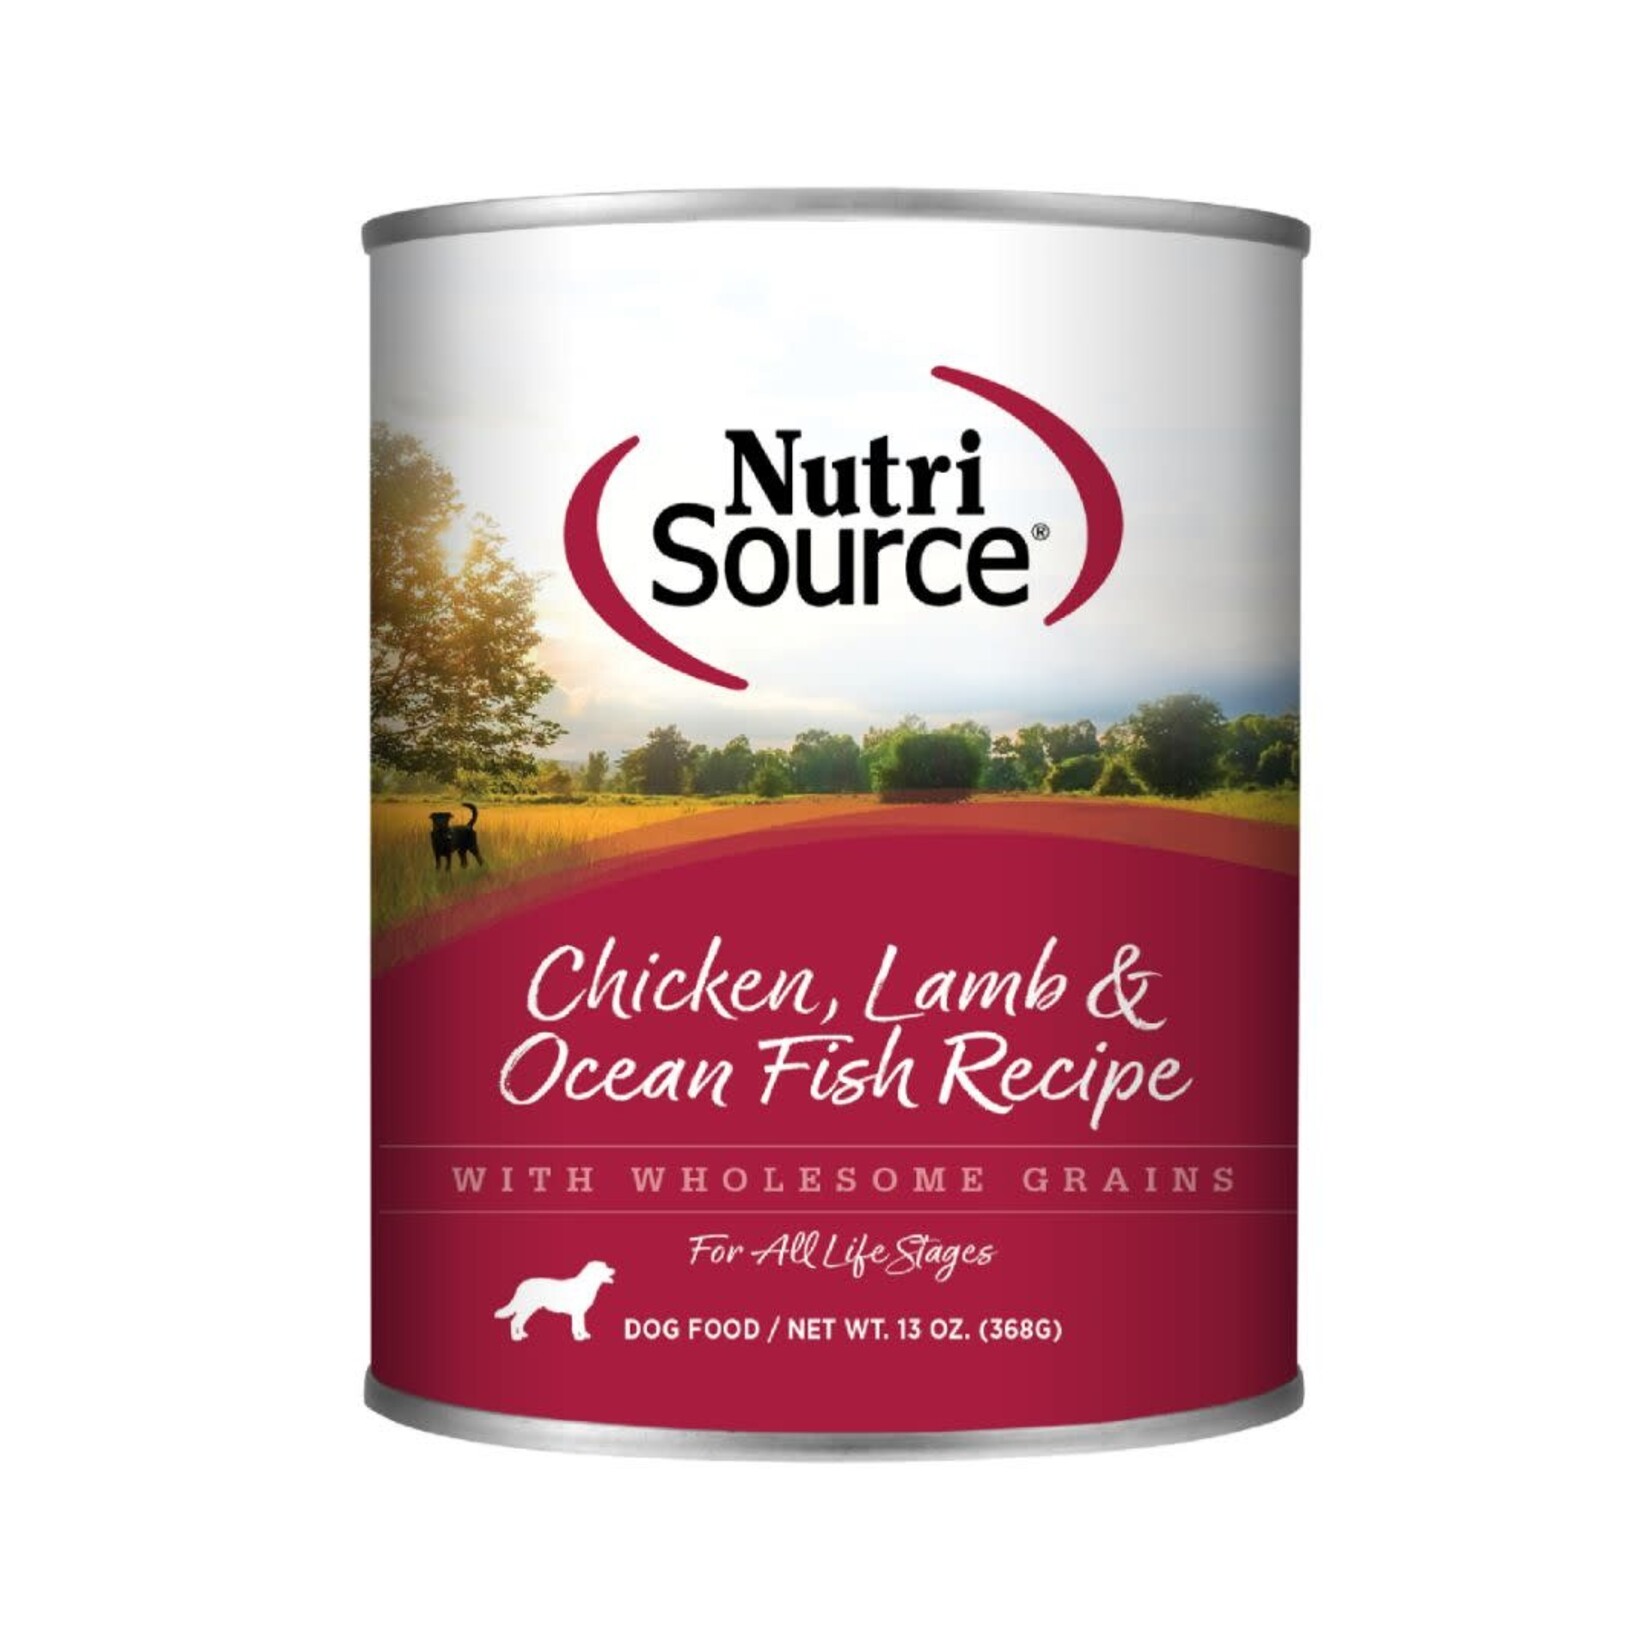 NutriSource NutriSource Chicken, Lamb & Ocean Fish Recipe Canned Dog Food